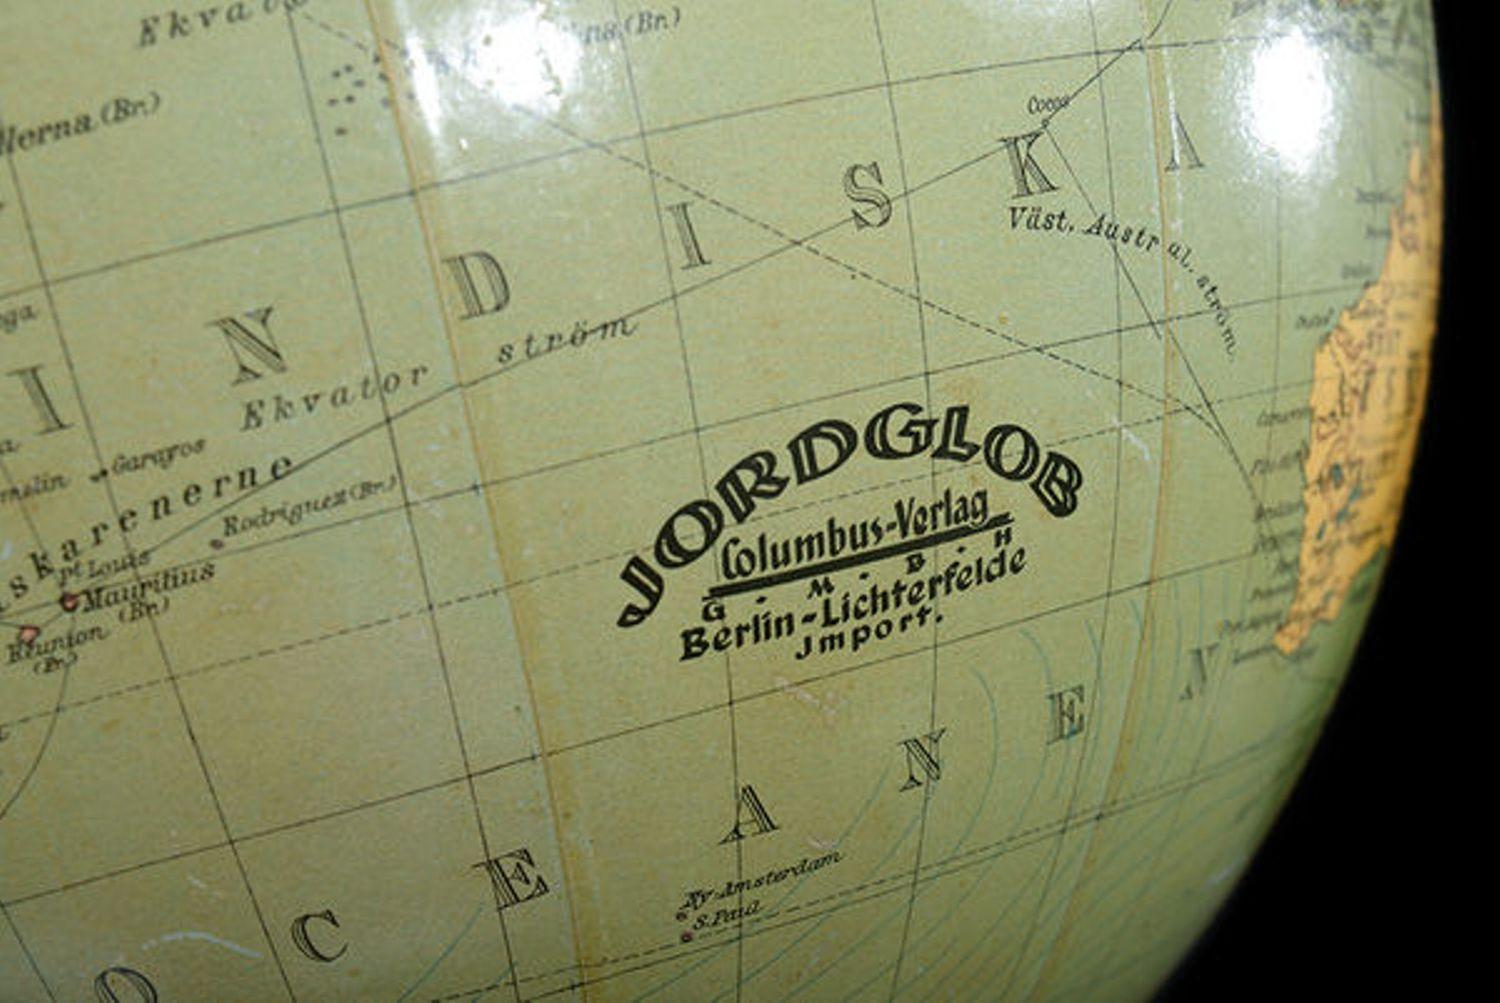 German Jordglob Columbus-Verlag Globe